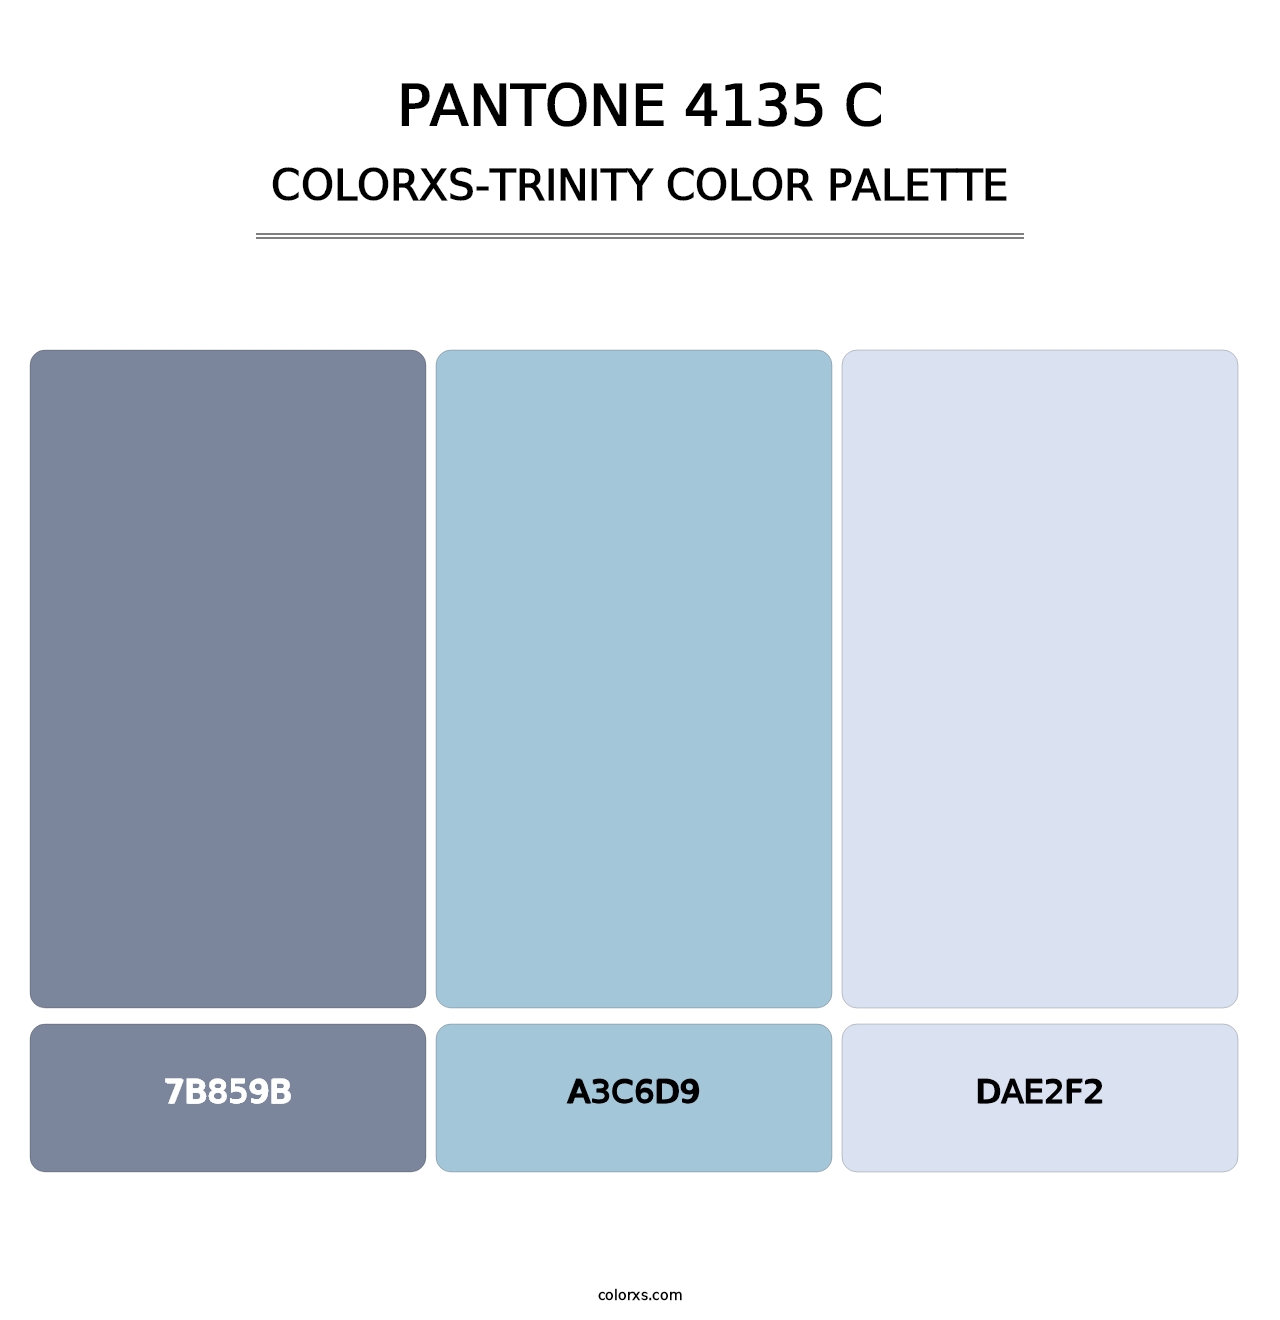 PANTONE 4135 C - Colorxs Trinity Palette